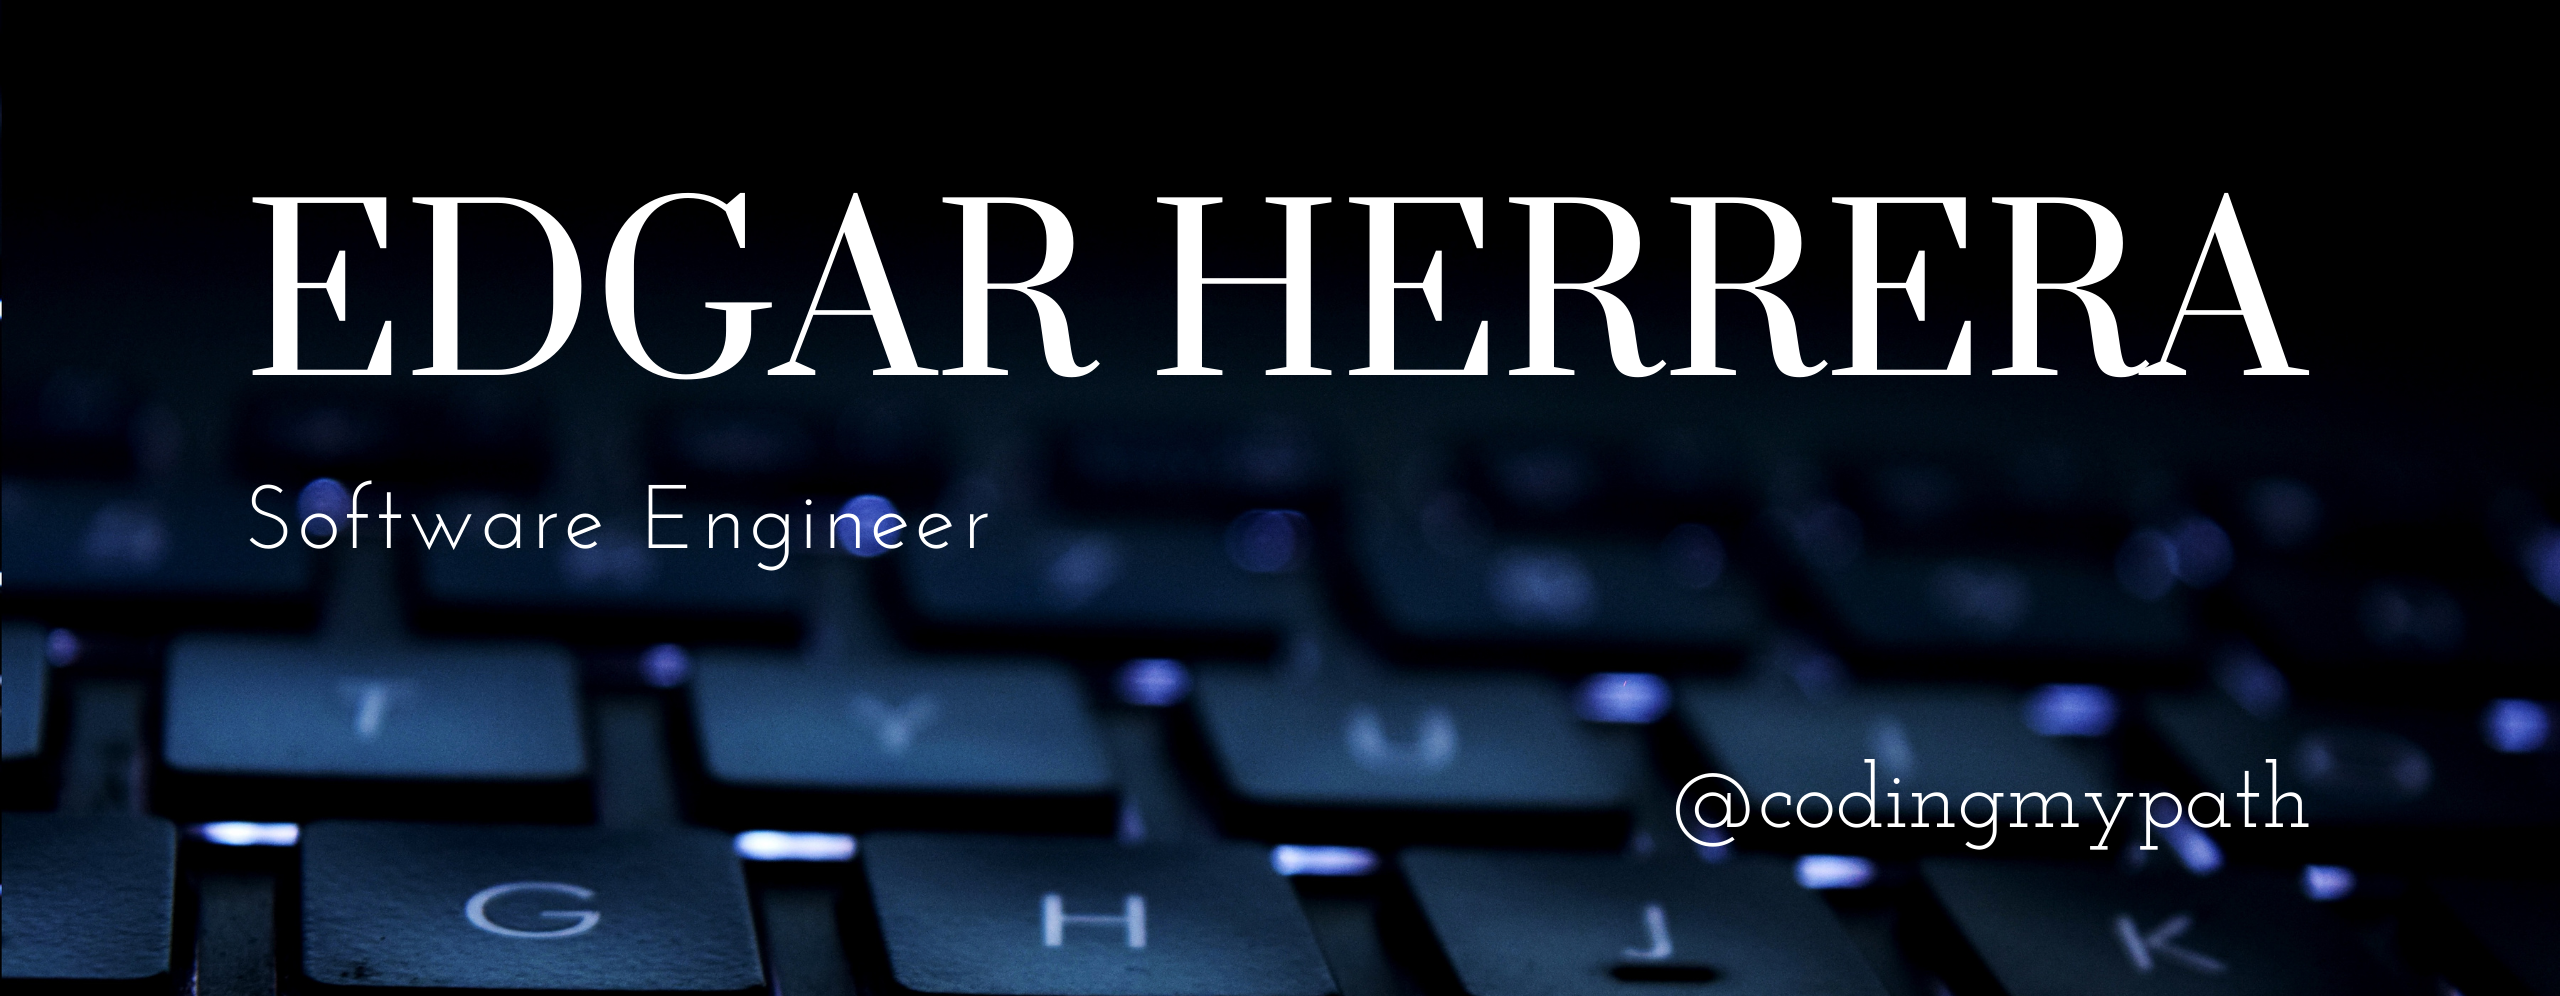 Edgar Herrera - Software Engineer Header